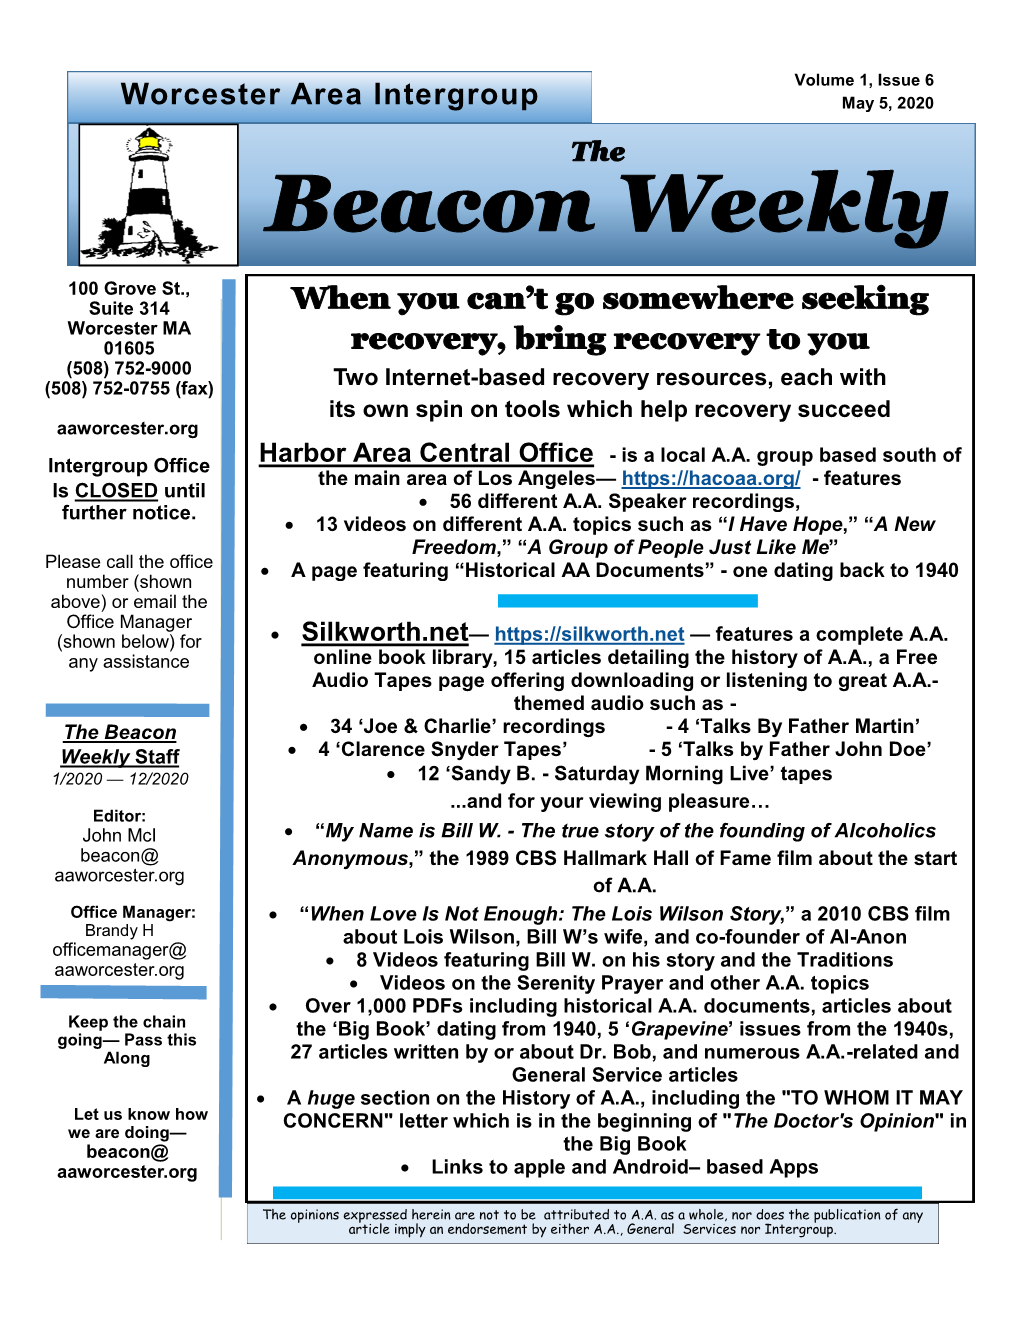 Beacon Weekly